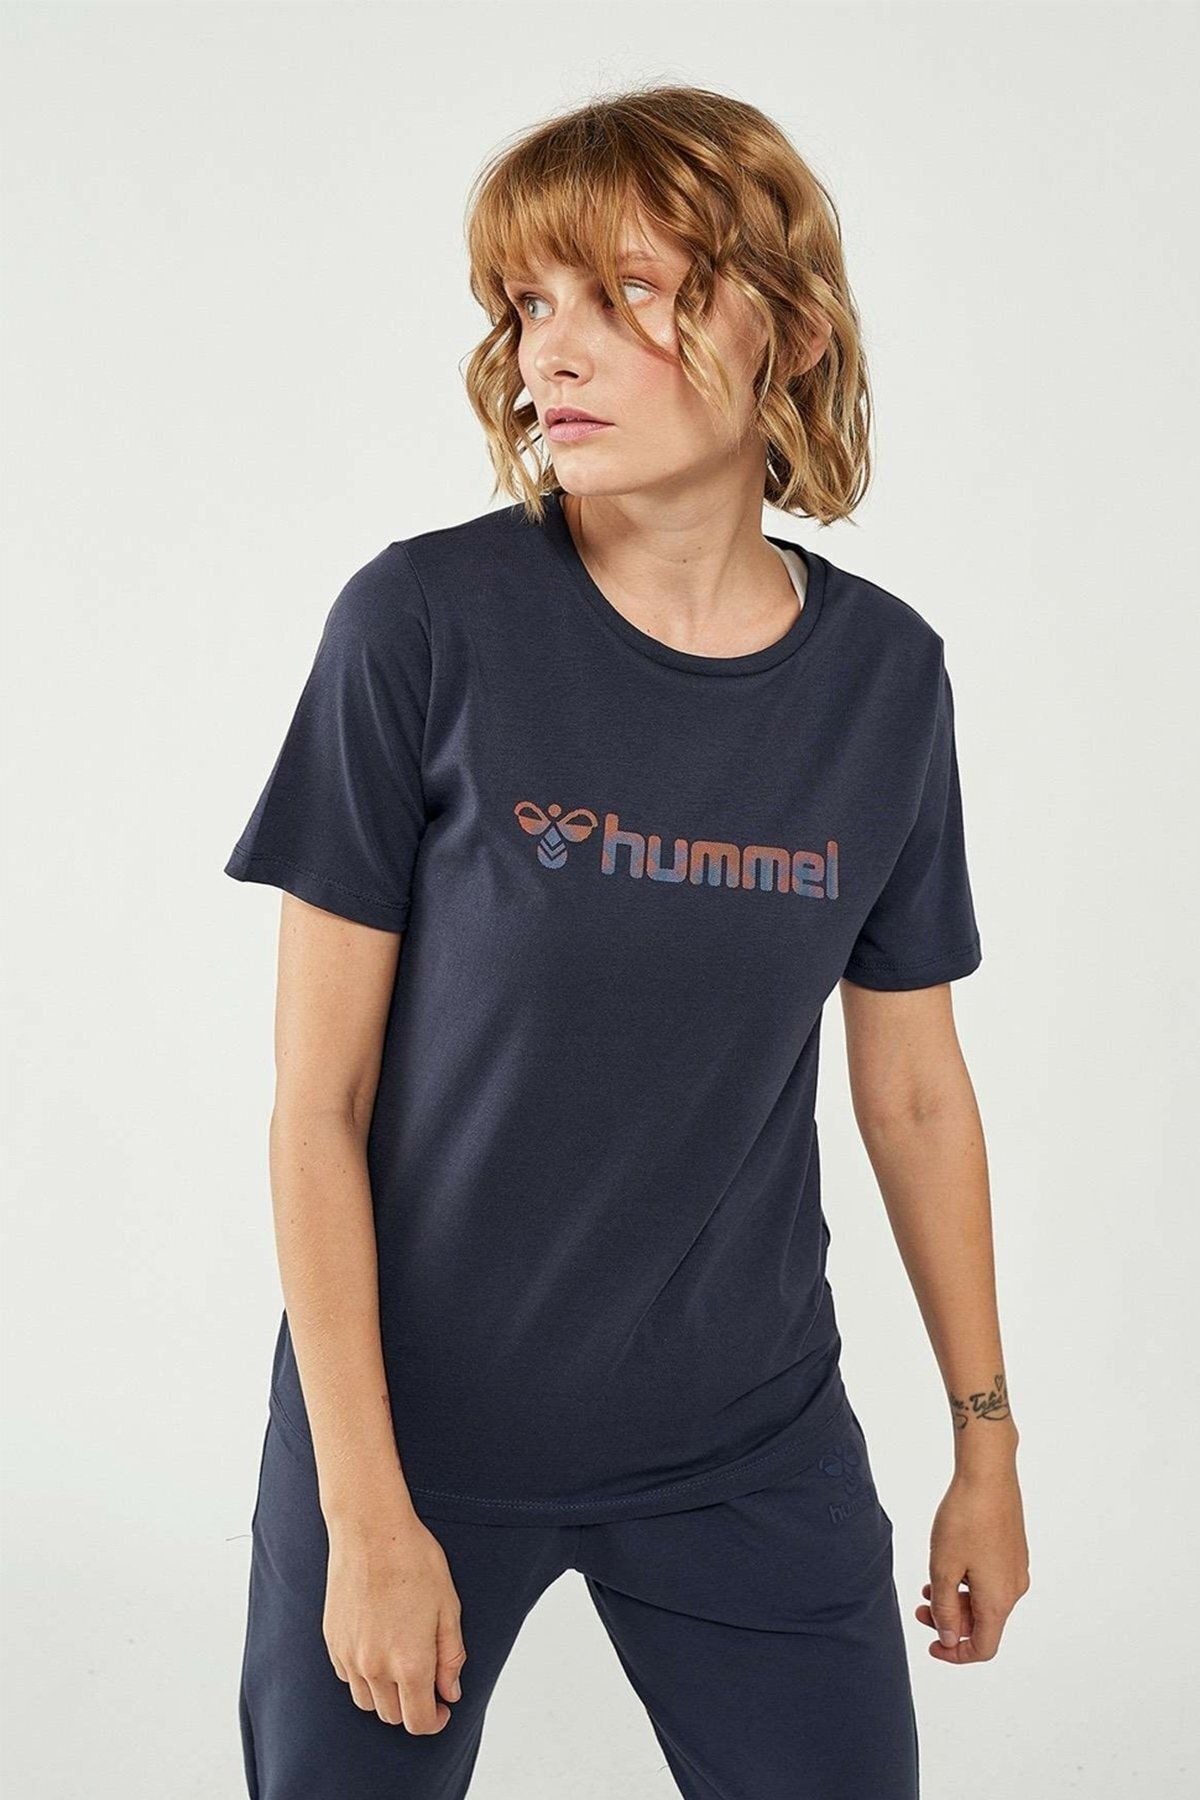 hummel Kadın Mimi Lacivert T-shirt 911331-7429